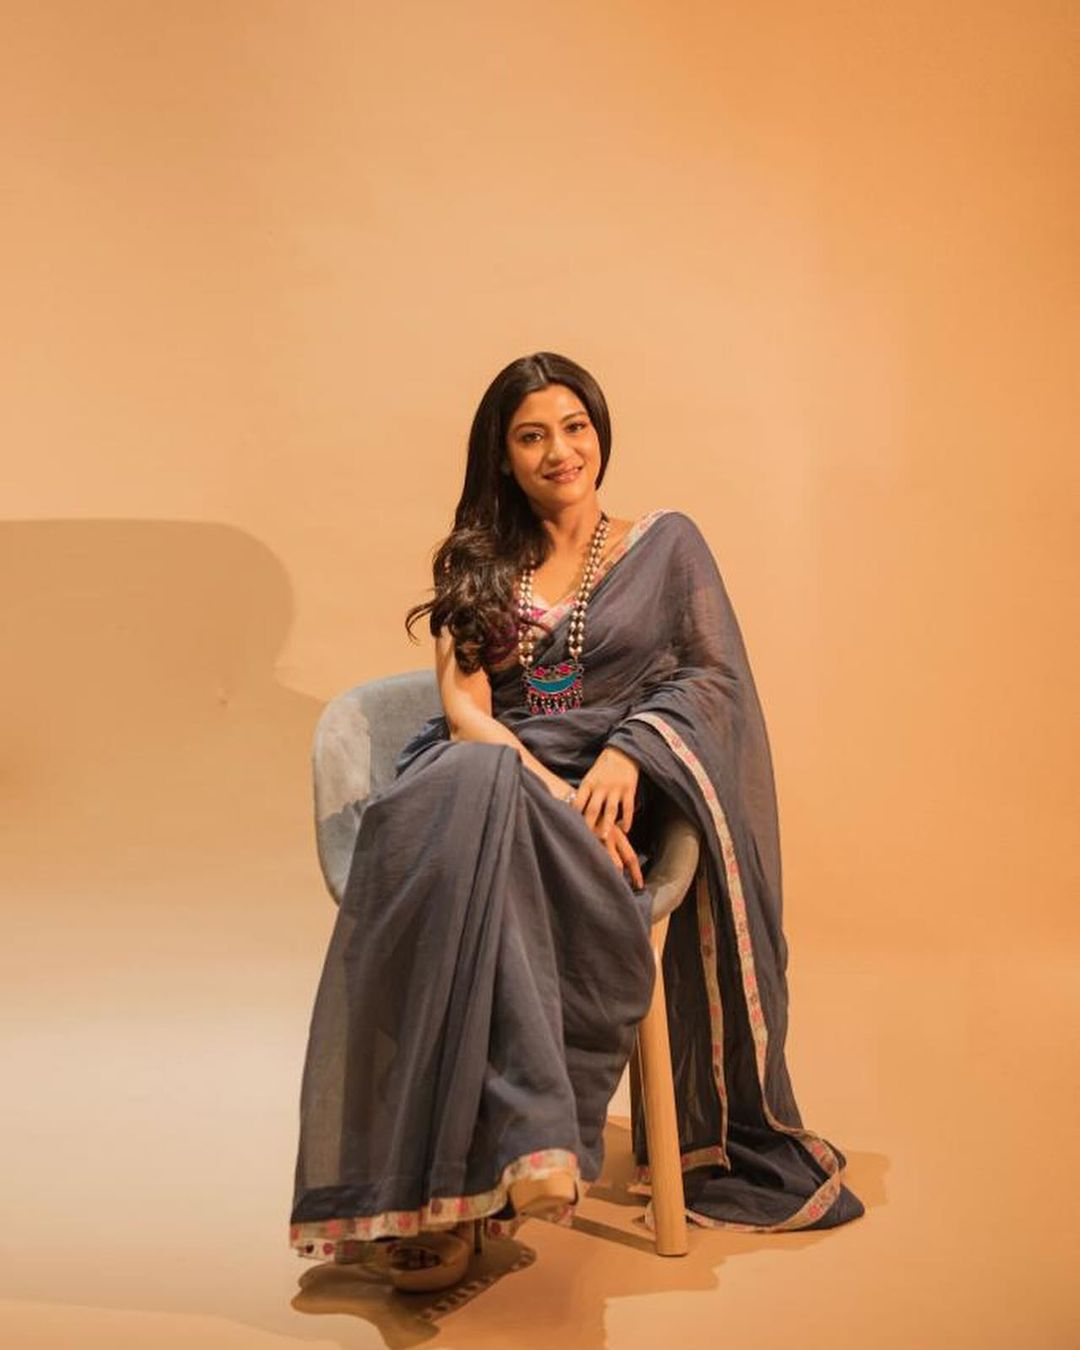 Saree photoshoot poses at home / saree poses for girls & women | Saree poses,  Girl poses, Saree photoshoot